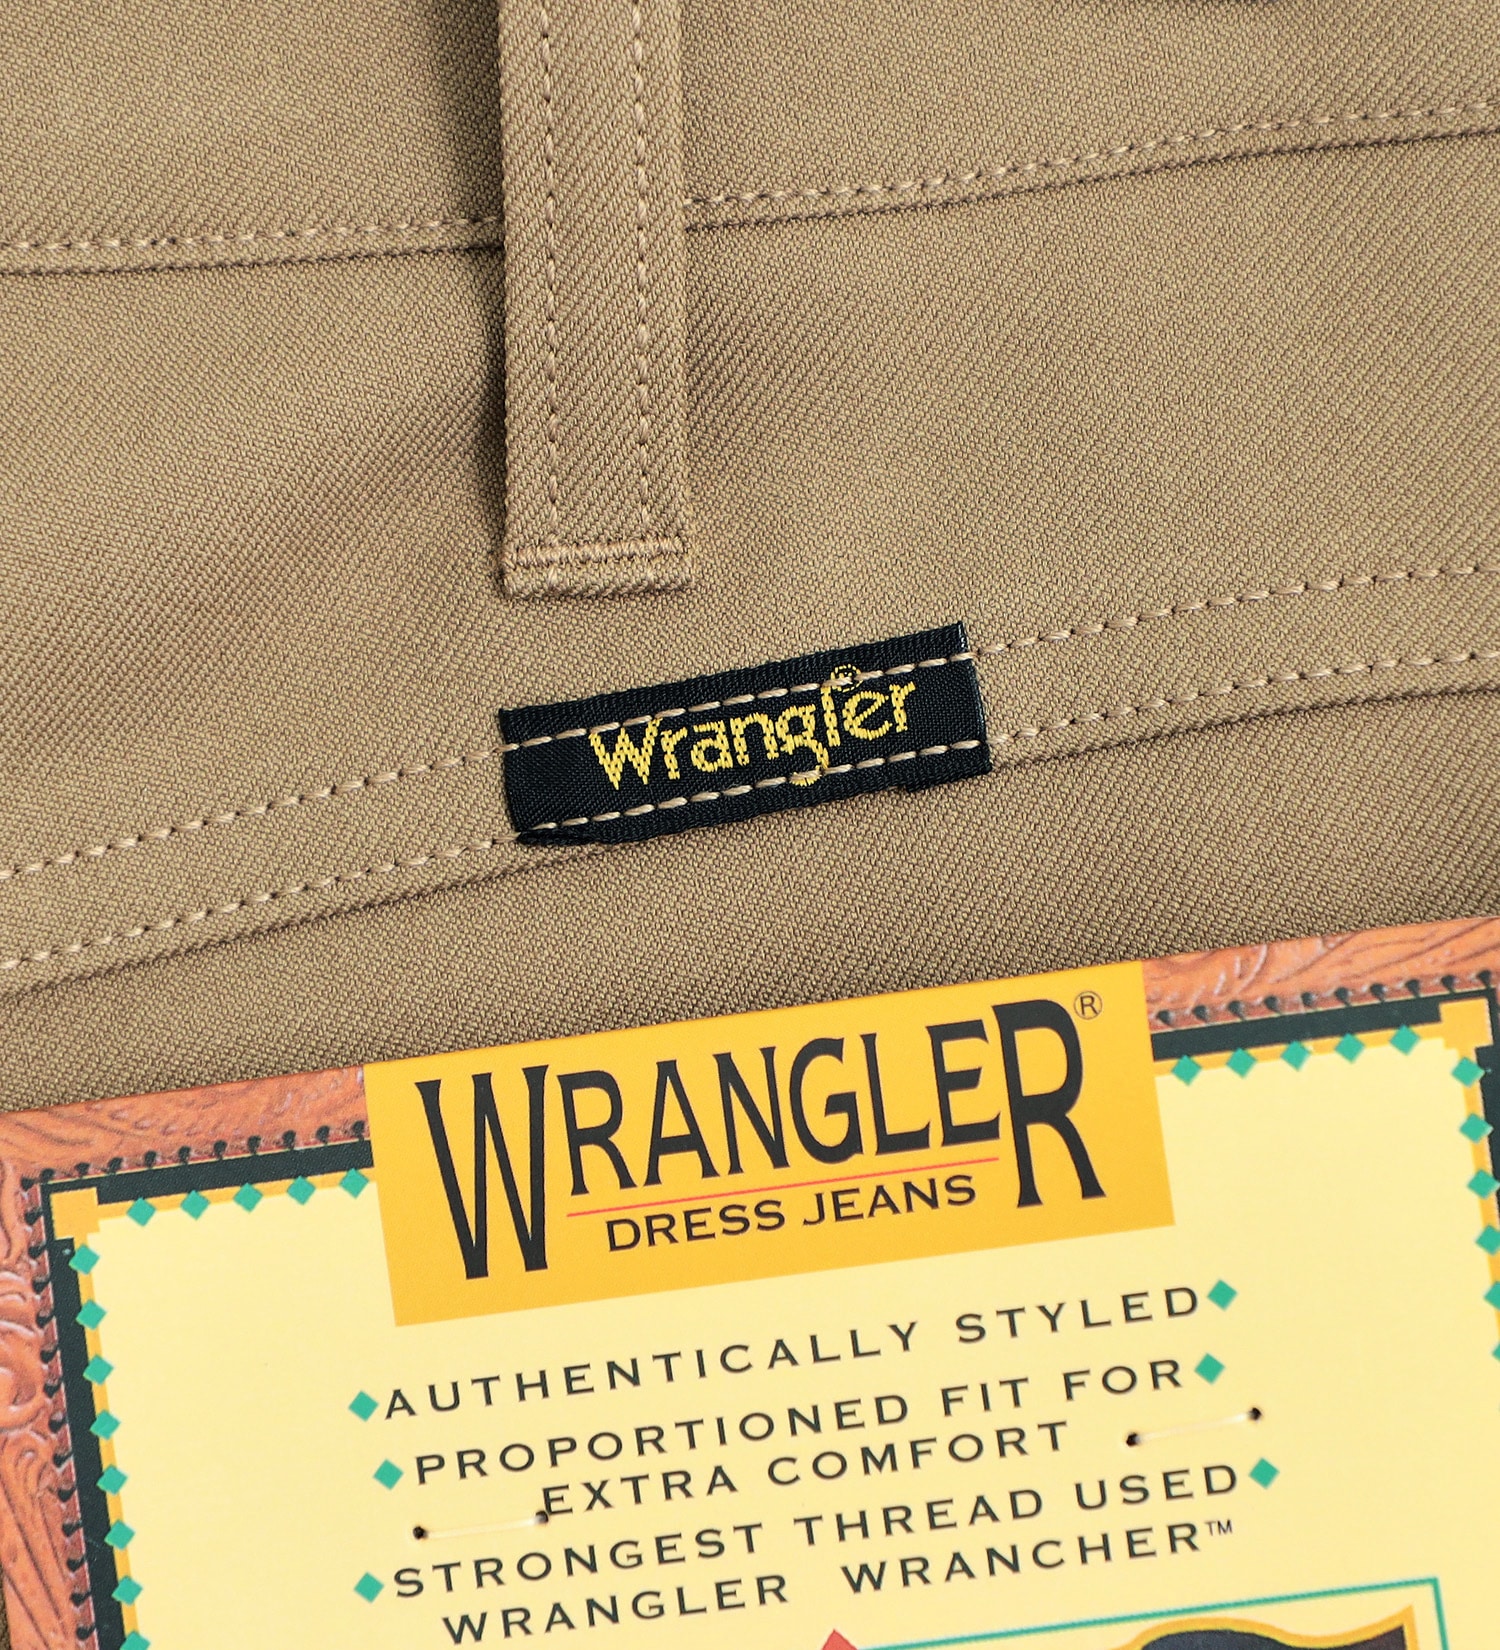 Wrangler(ラングラー)の【試着対象】WRANGLER WRANCHER/ランチャー フレアードレスパンツ(レディース)|パンツ/パンツ/レディース|ベージュ